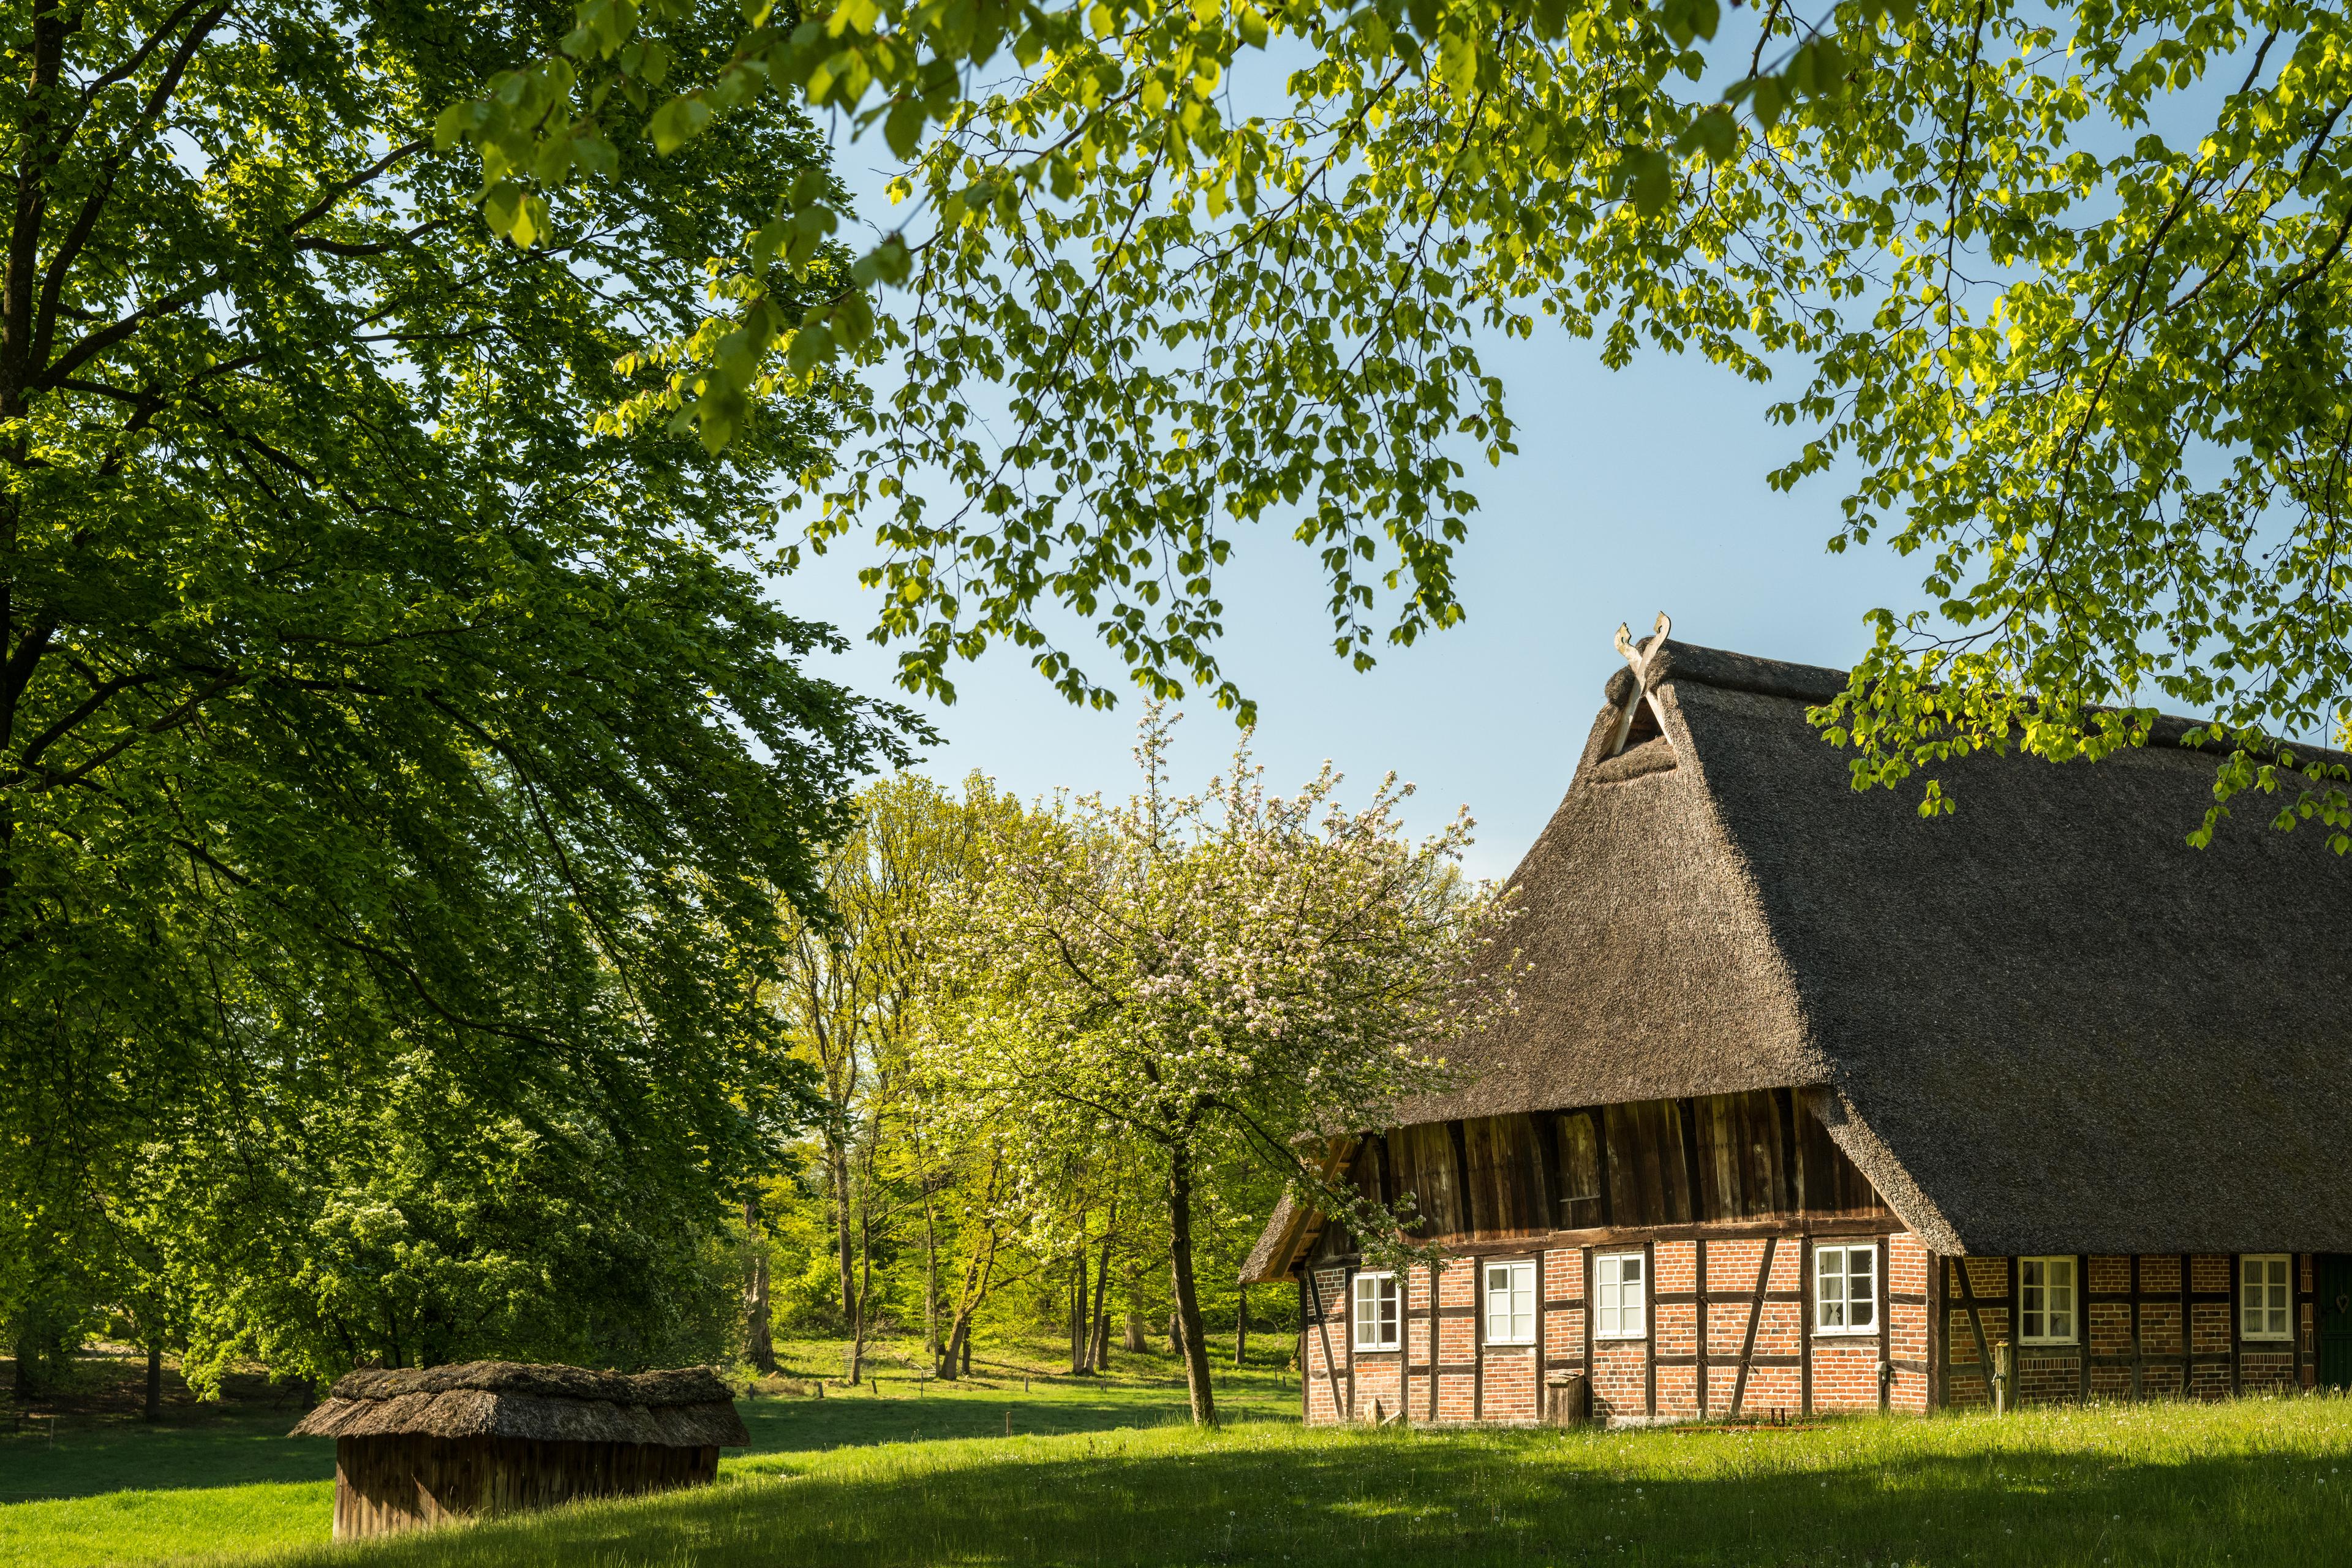 Wilsede liegt im autofreien Naturschutzgebiet Lüneburger Heide